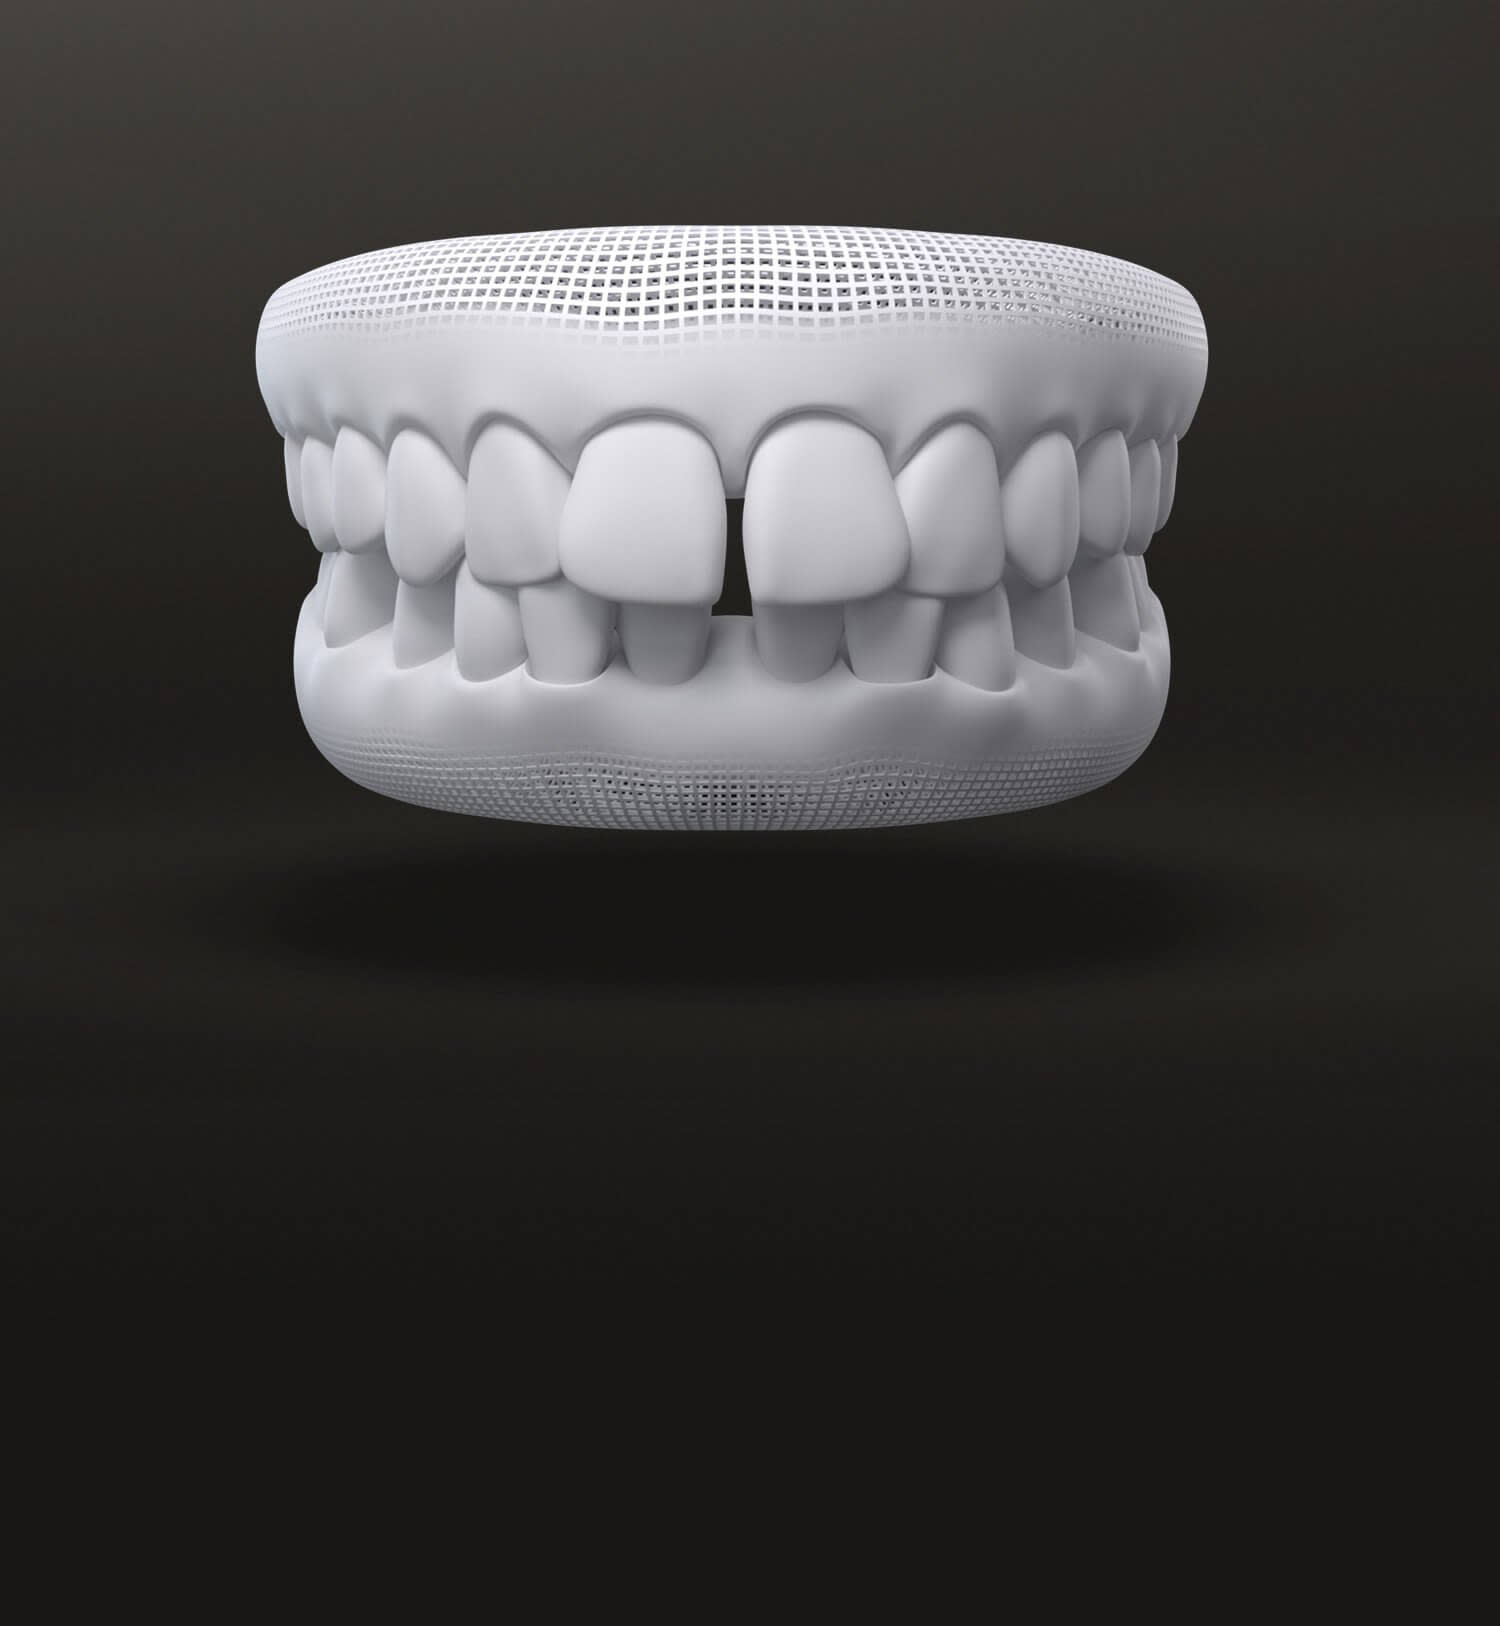 Gap teeth 3d model - Invisalign treatments - UK